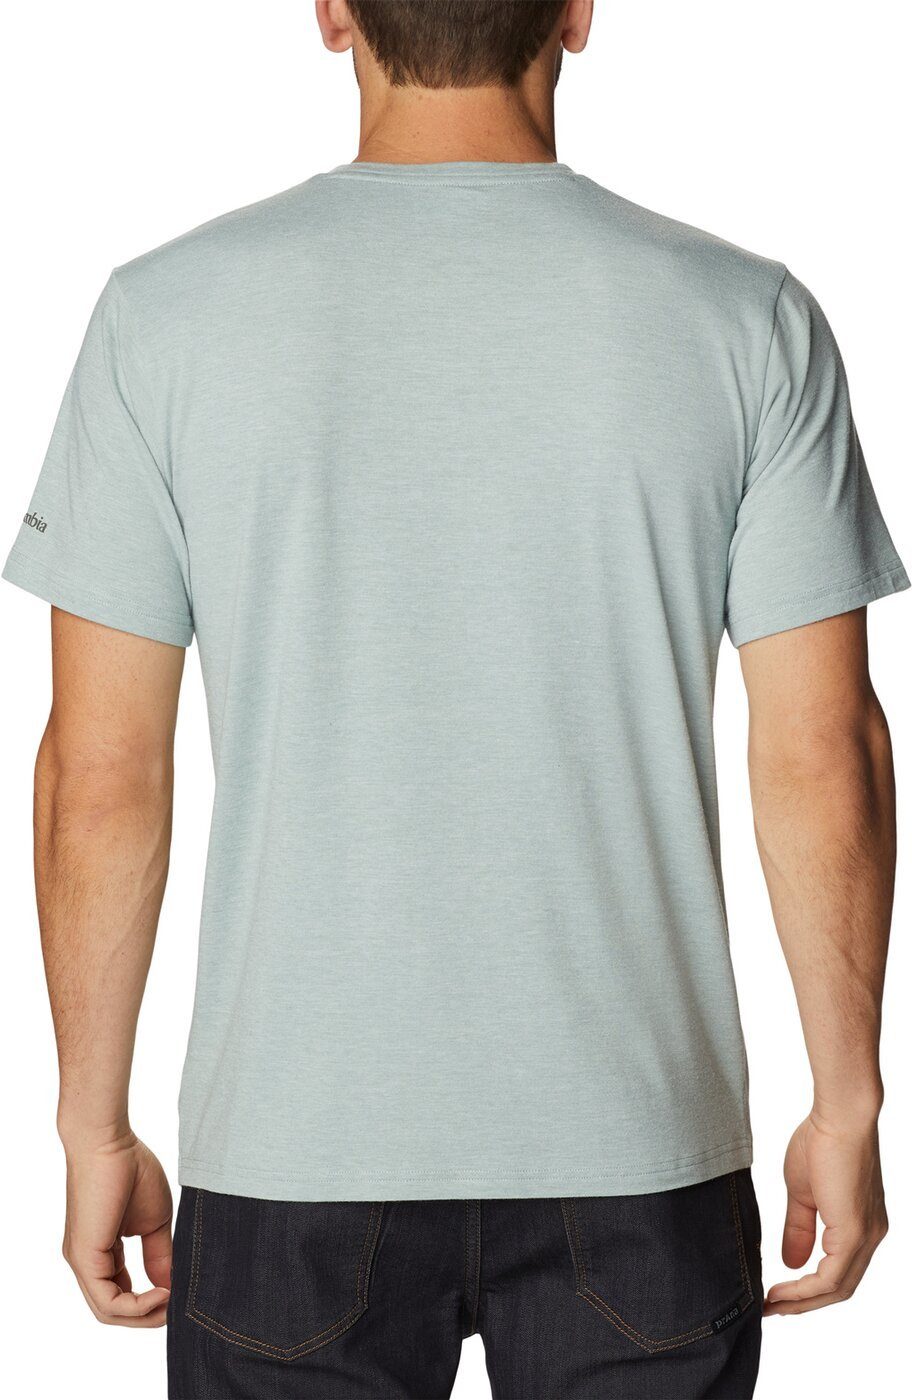 T-Shirt Sun Palmed Sleeve Hex Trek Columbia Niagara Graphic Men's Graphi Hthr, Short 351